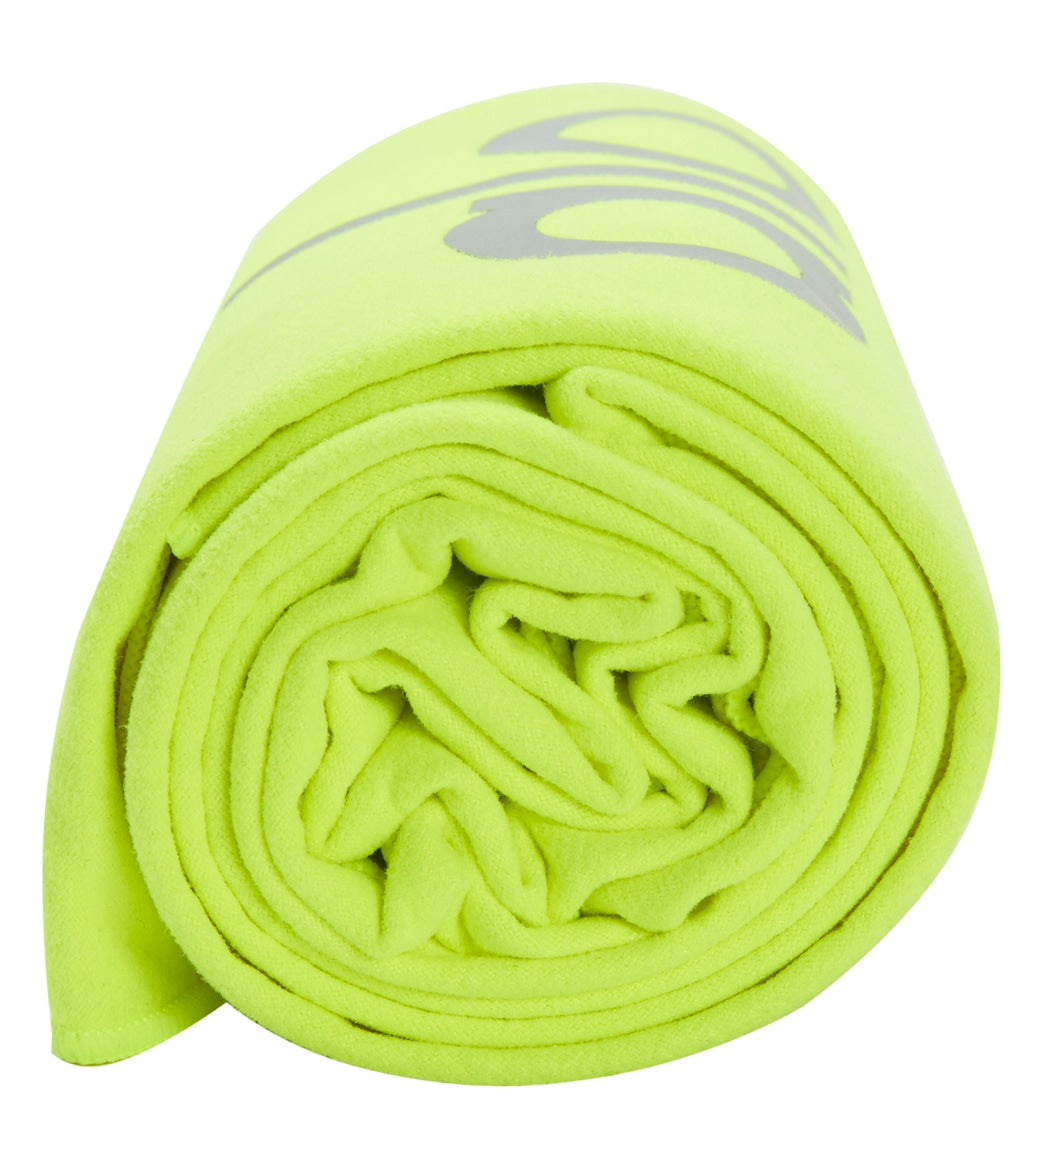 Alo Yoga Grounded No-Slip Mat Towel at EverydayYoga.com - Free 